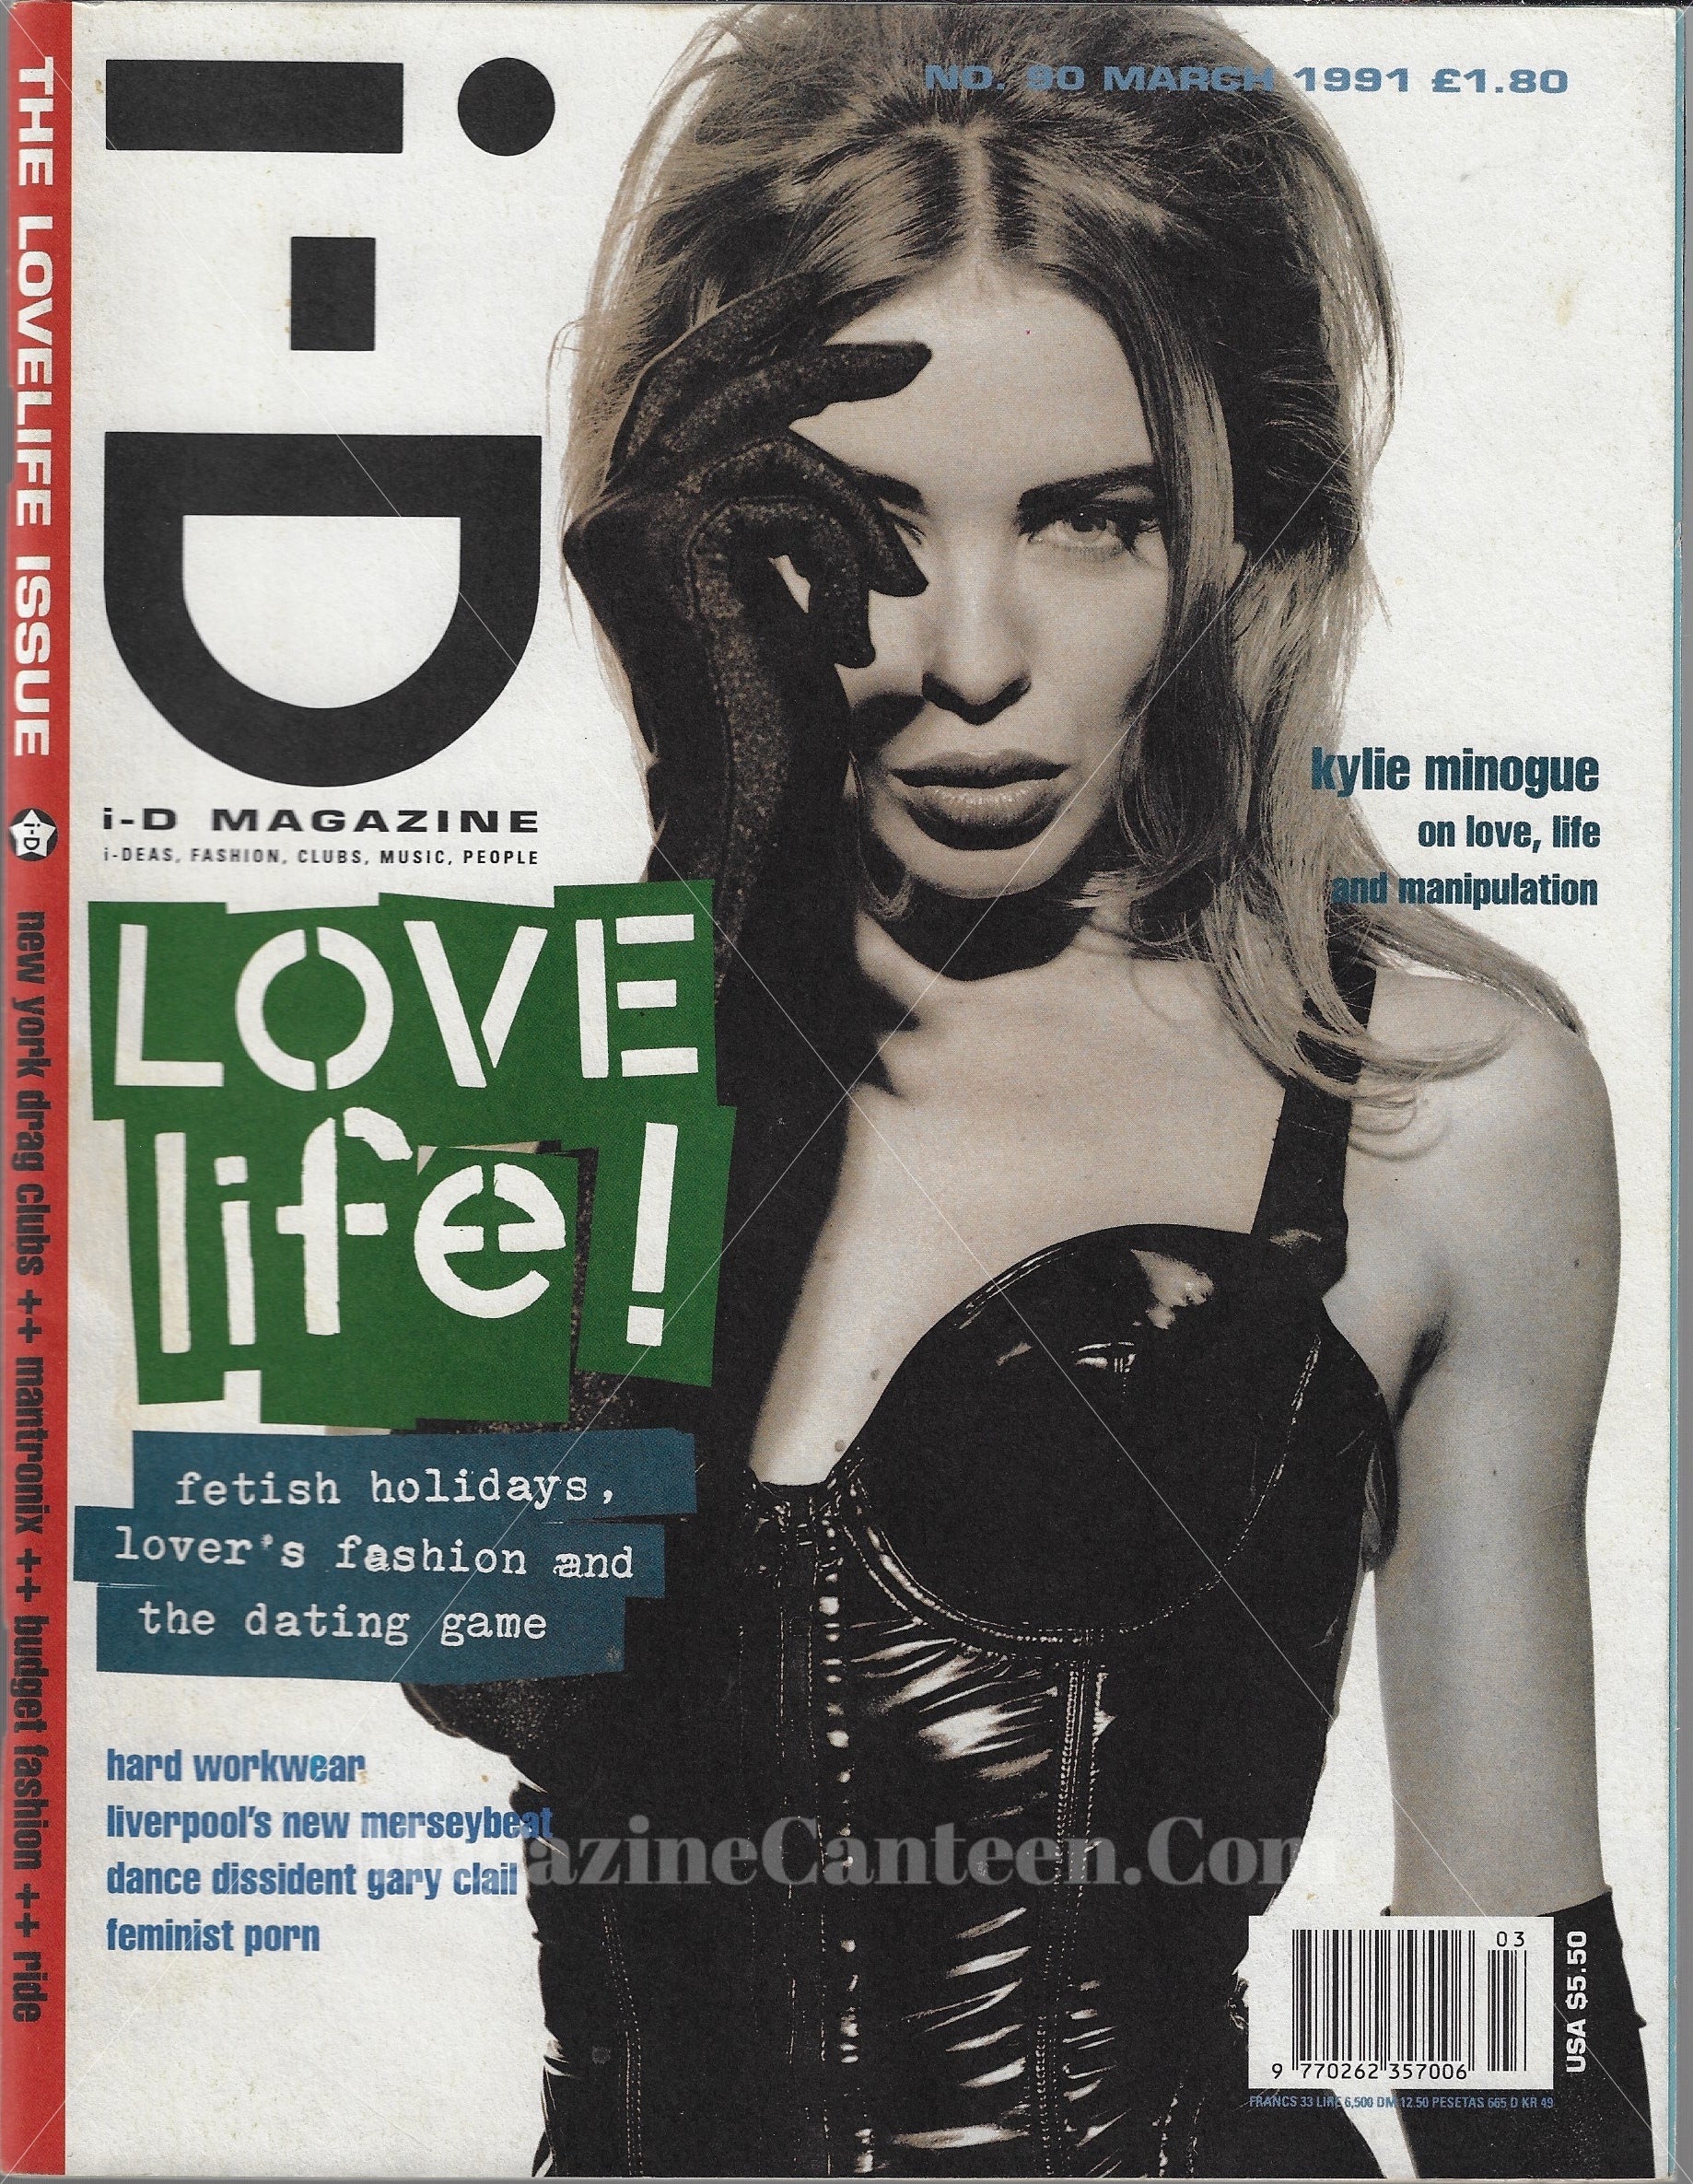 I-D Magazine 90 - Kylie Minogue 1991